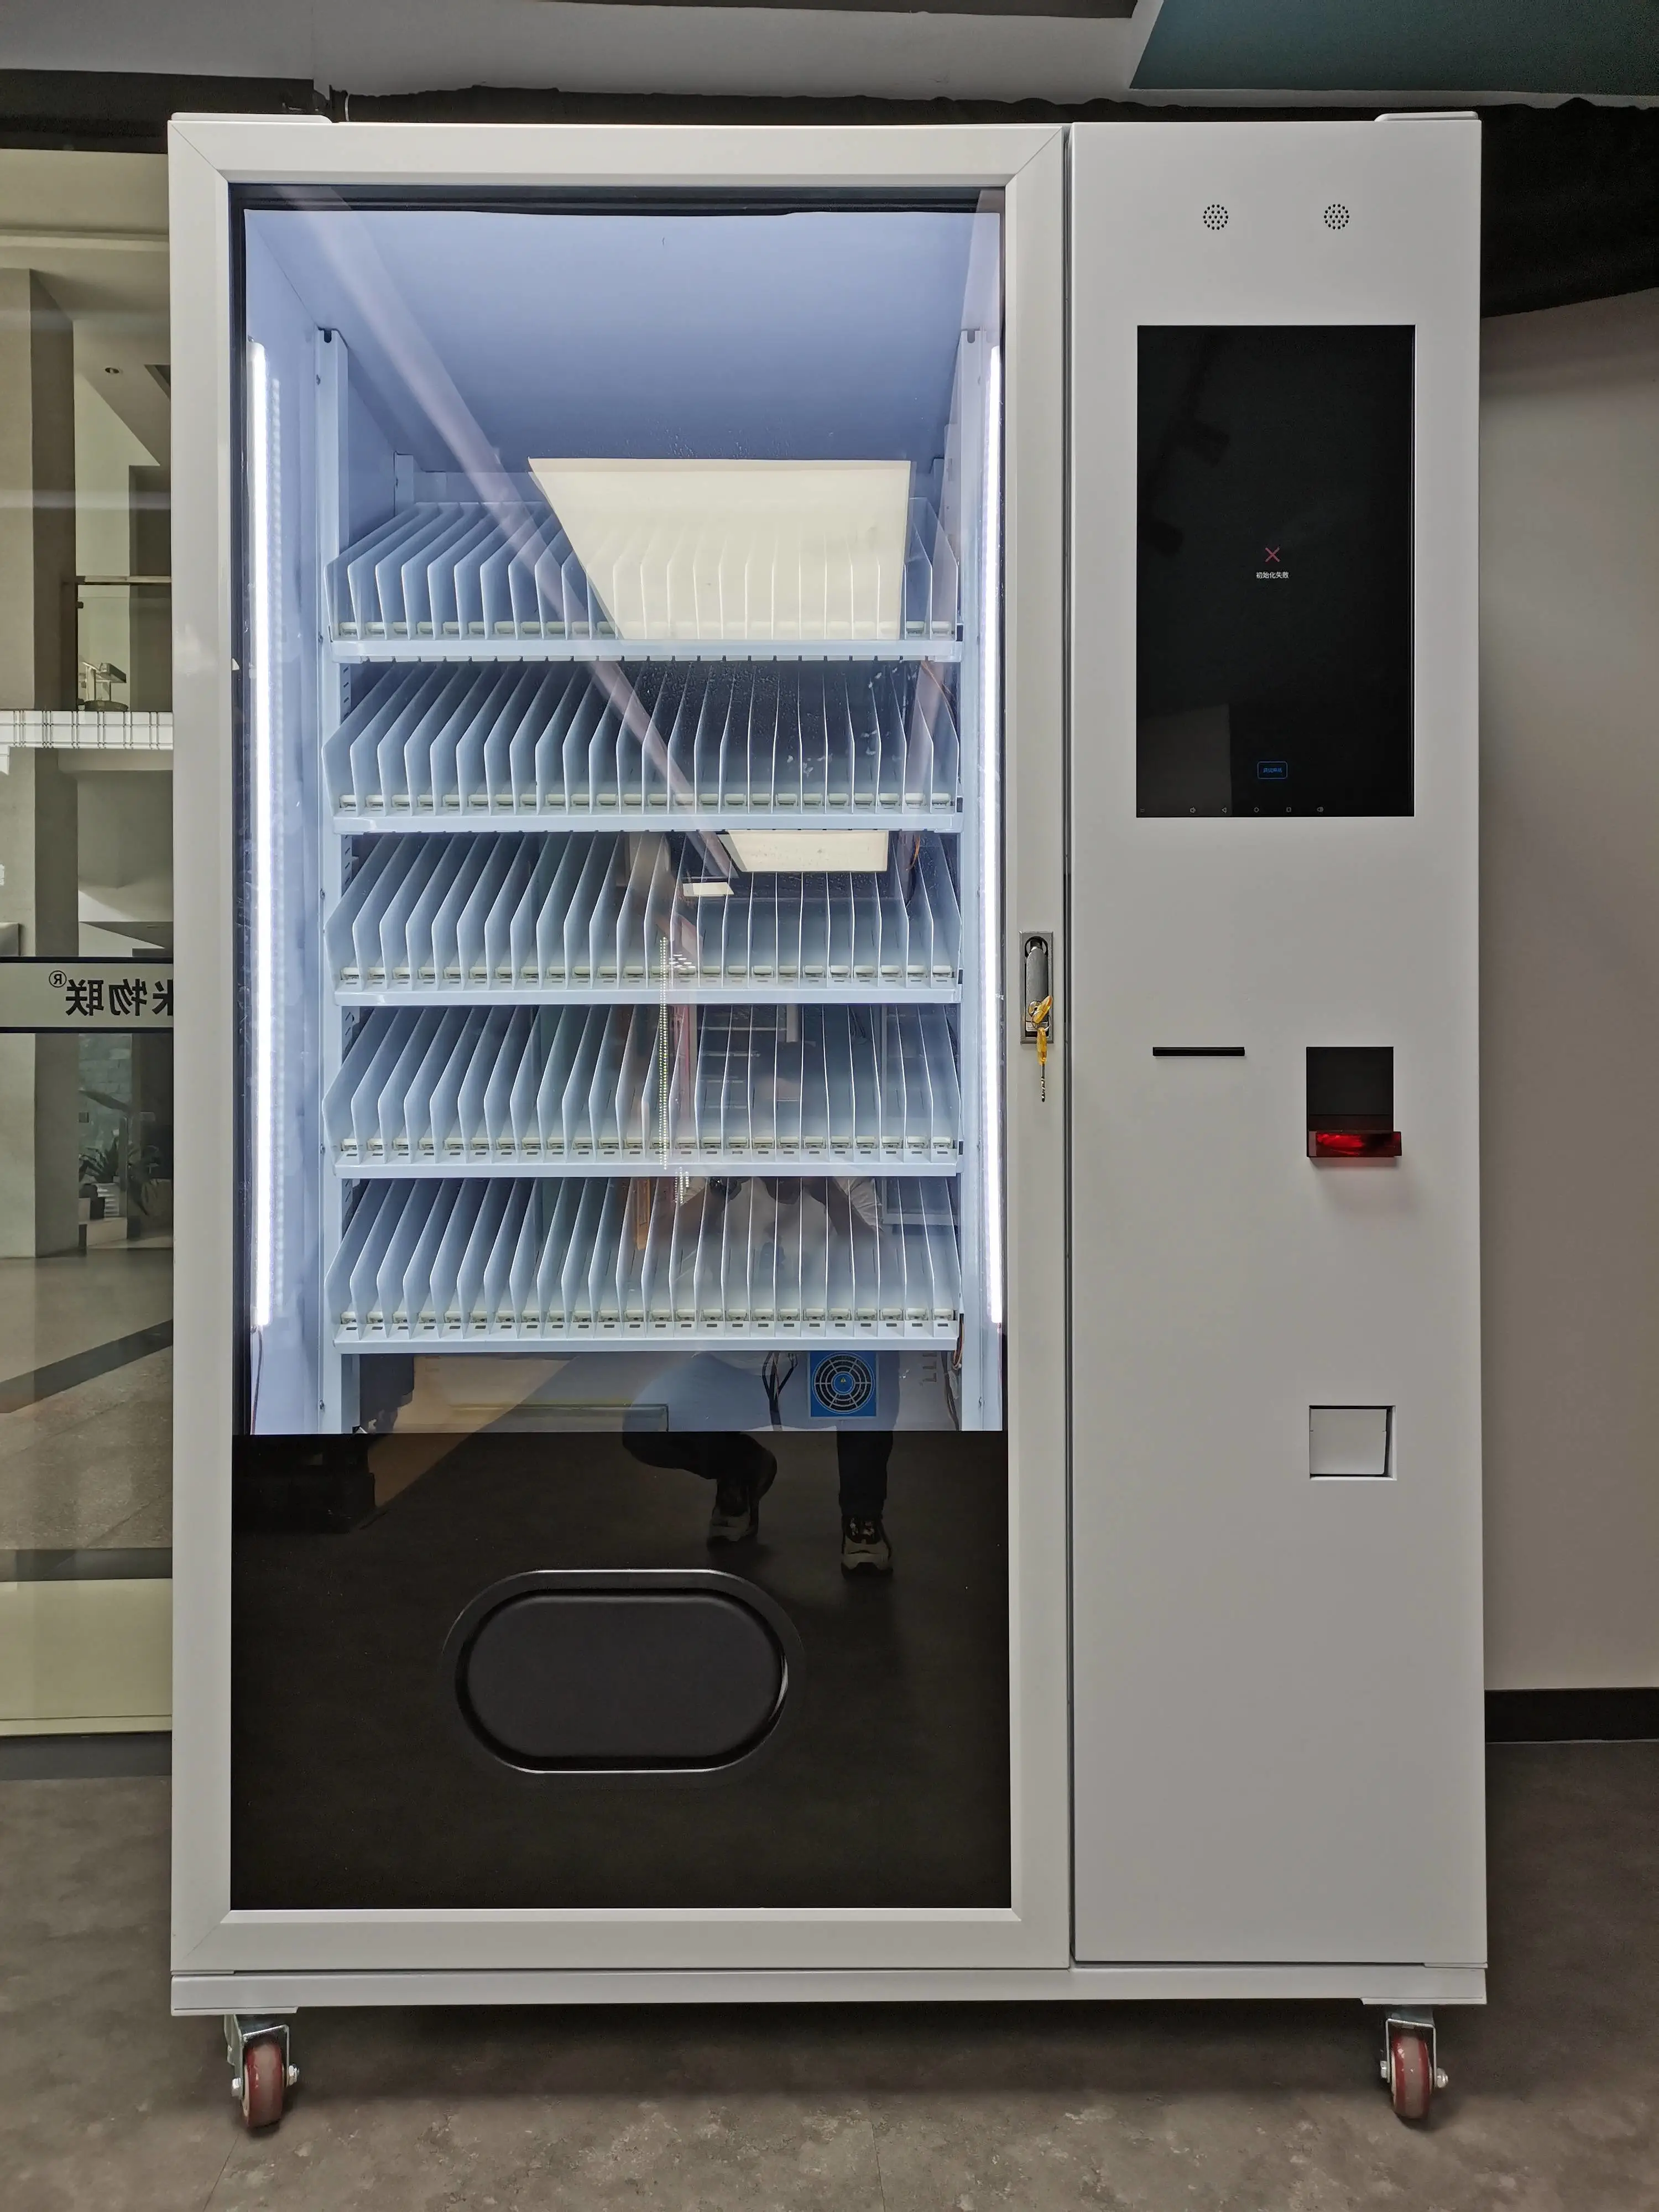 24 hour pharmacy otc medicine vending machine